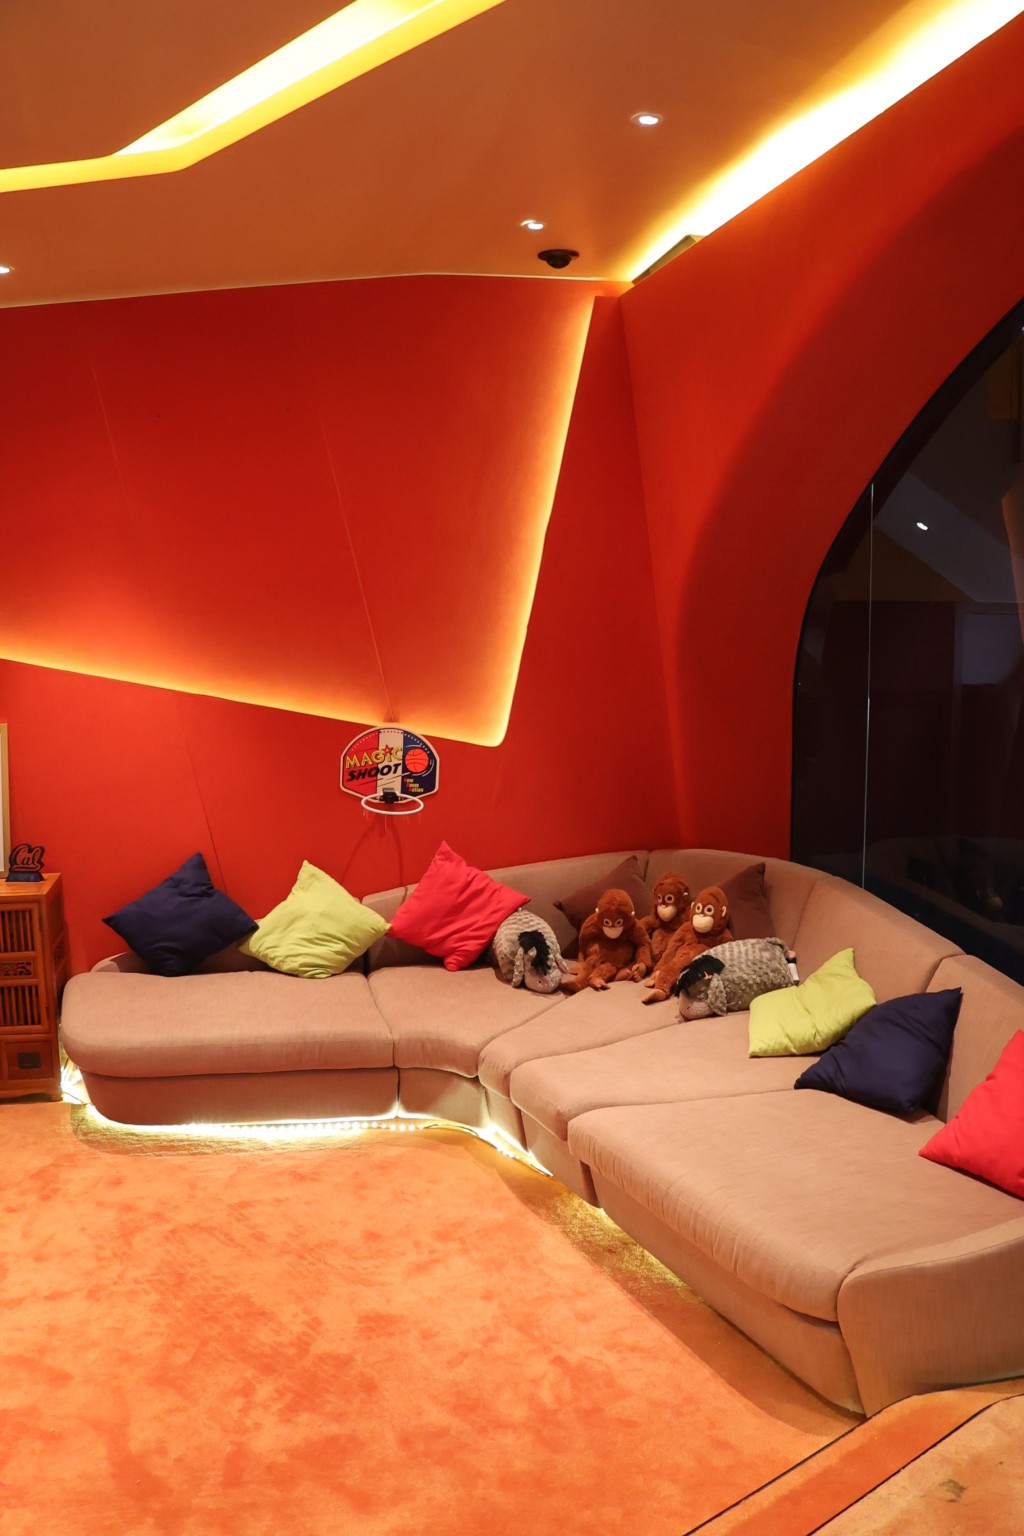 Russell三兄弟的睡房采用橙红色、不规则墙身设计，配合灯光，凸显摩登型格。